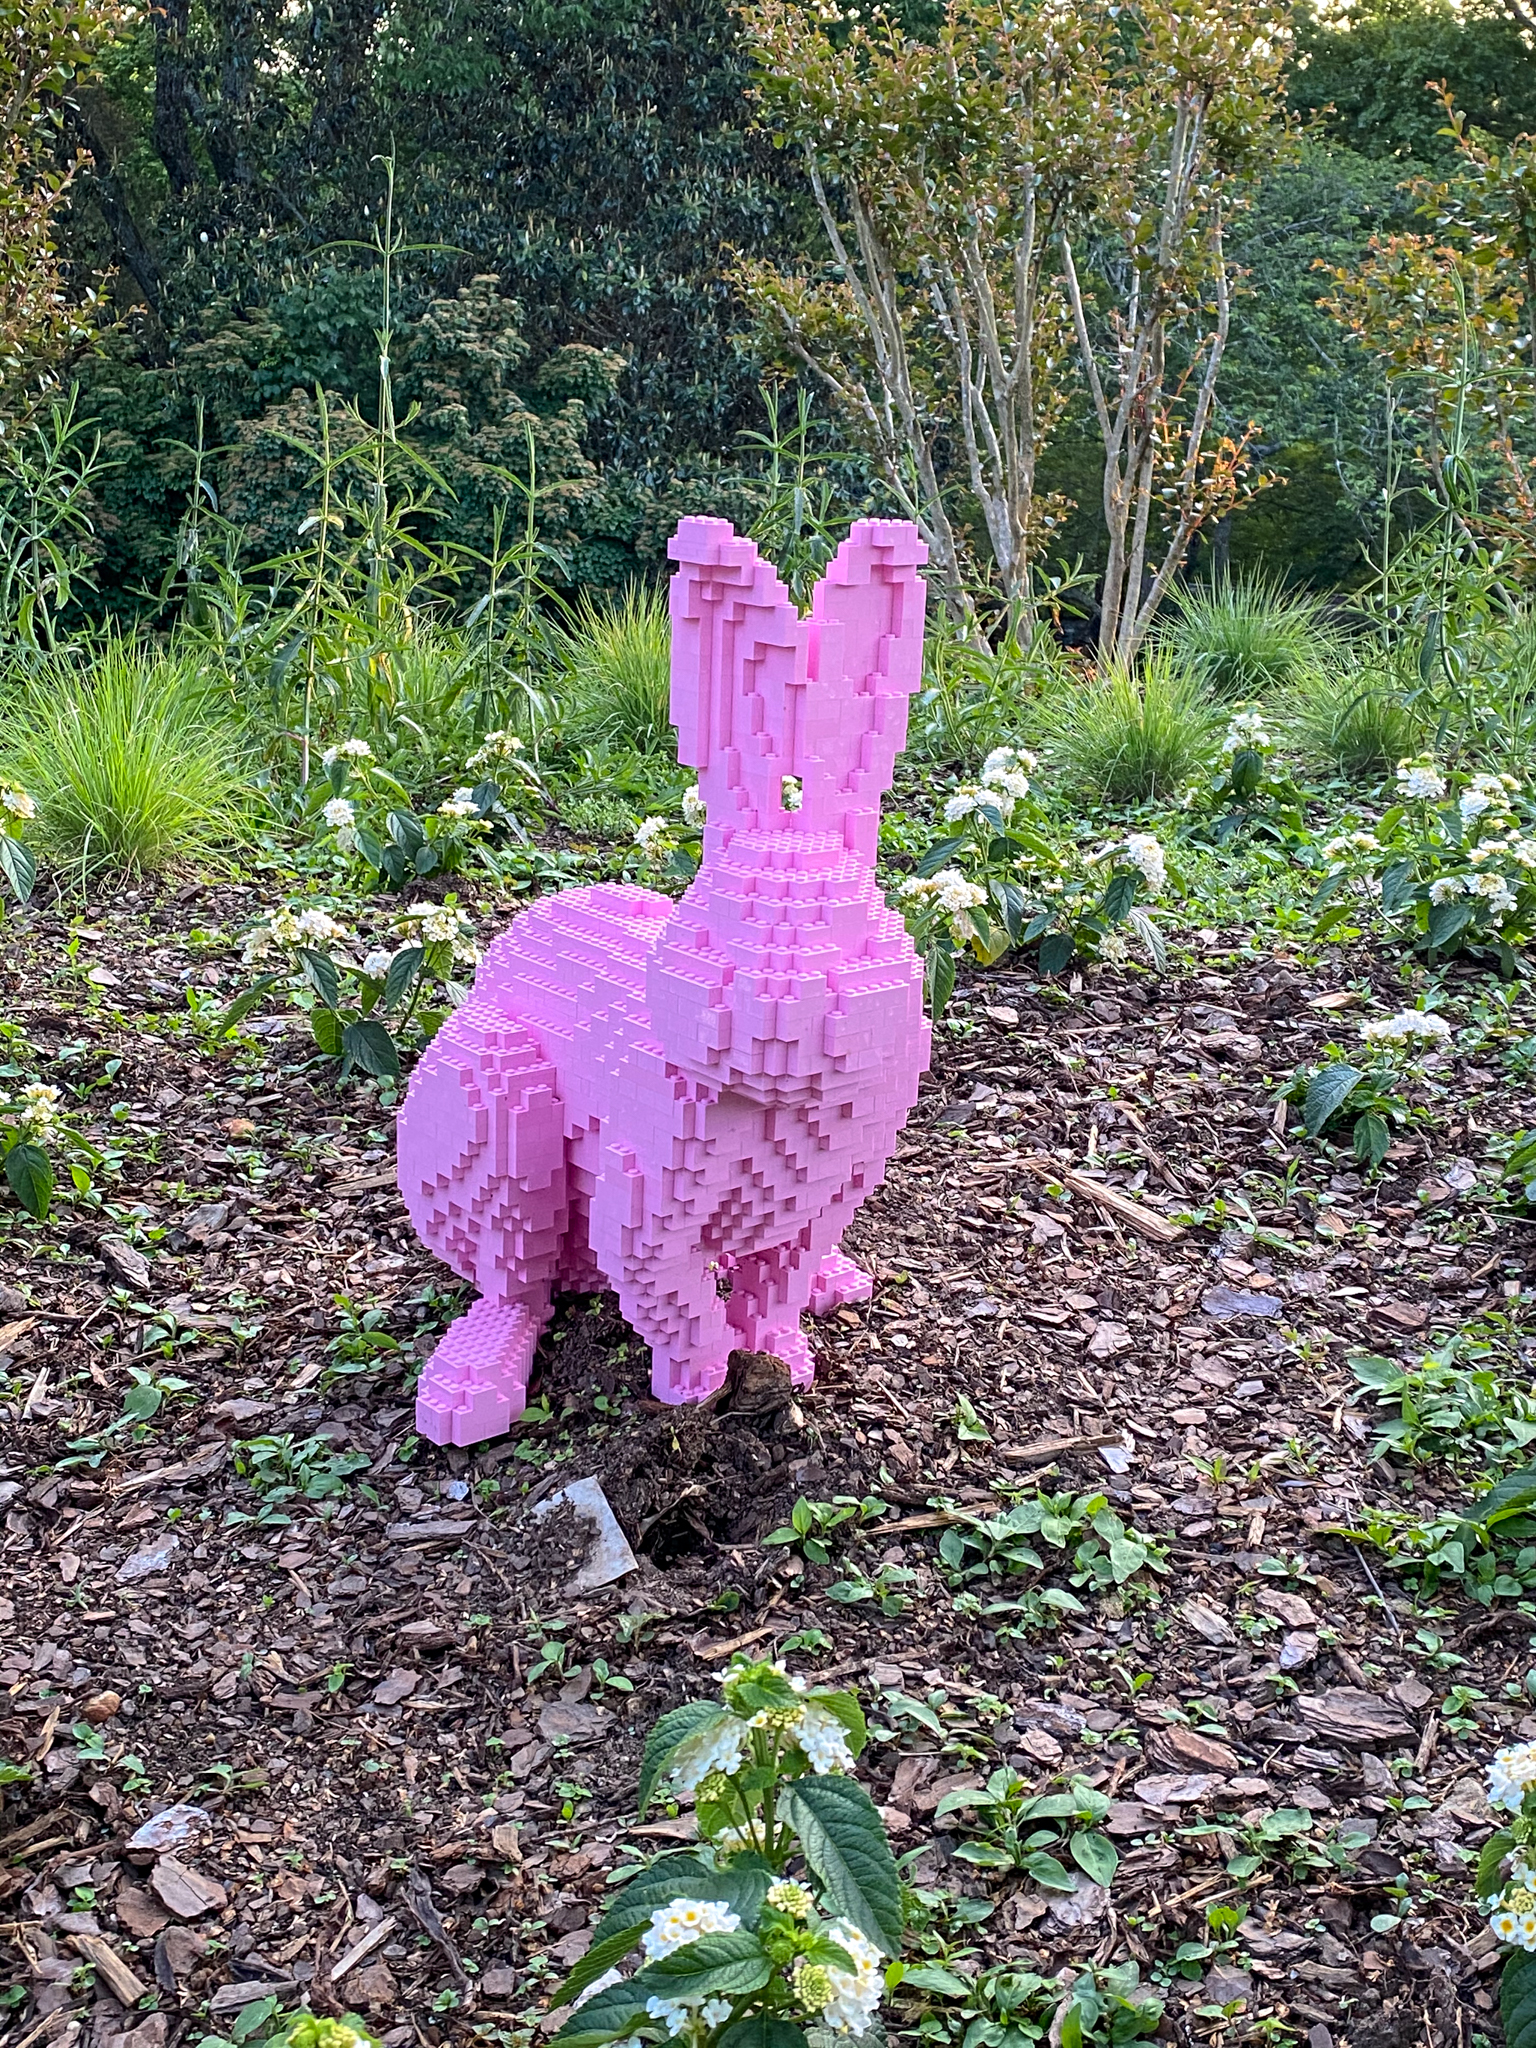 Crouching pink Lego rabbit